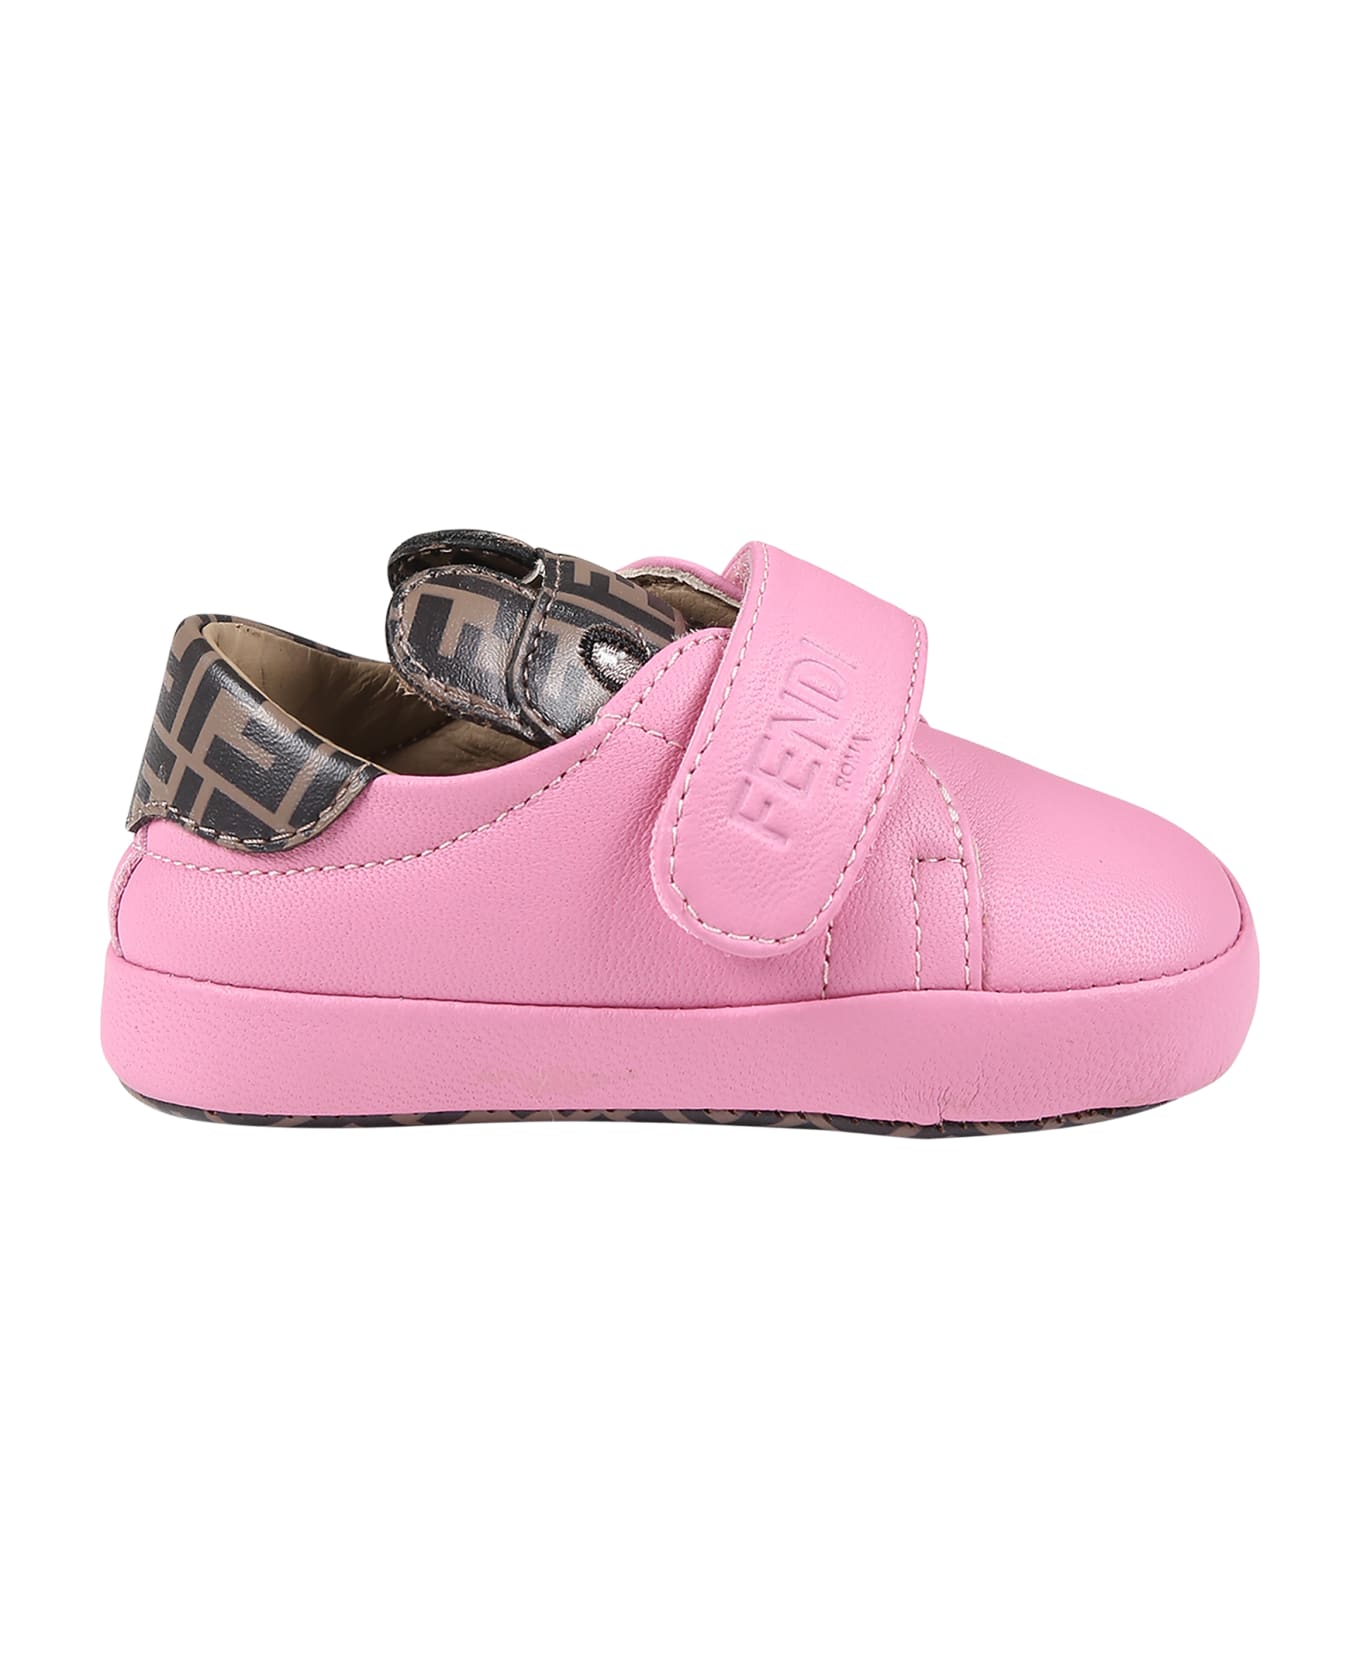 Fendi Fuchsia Sneakers For Baby Girl - Fuchsia シューズ